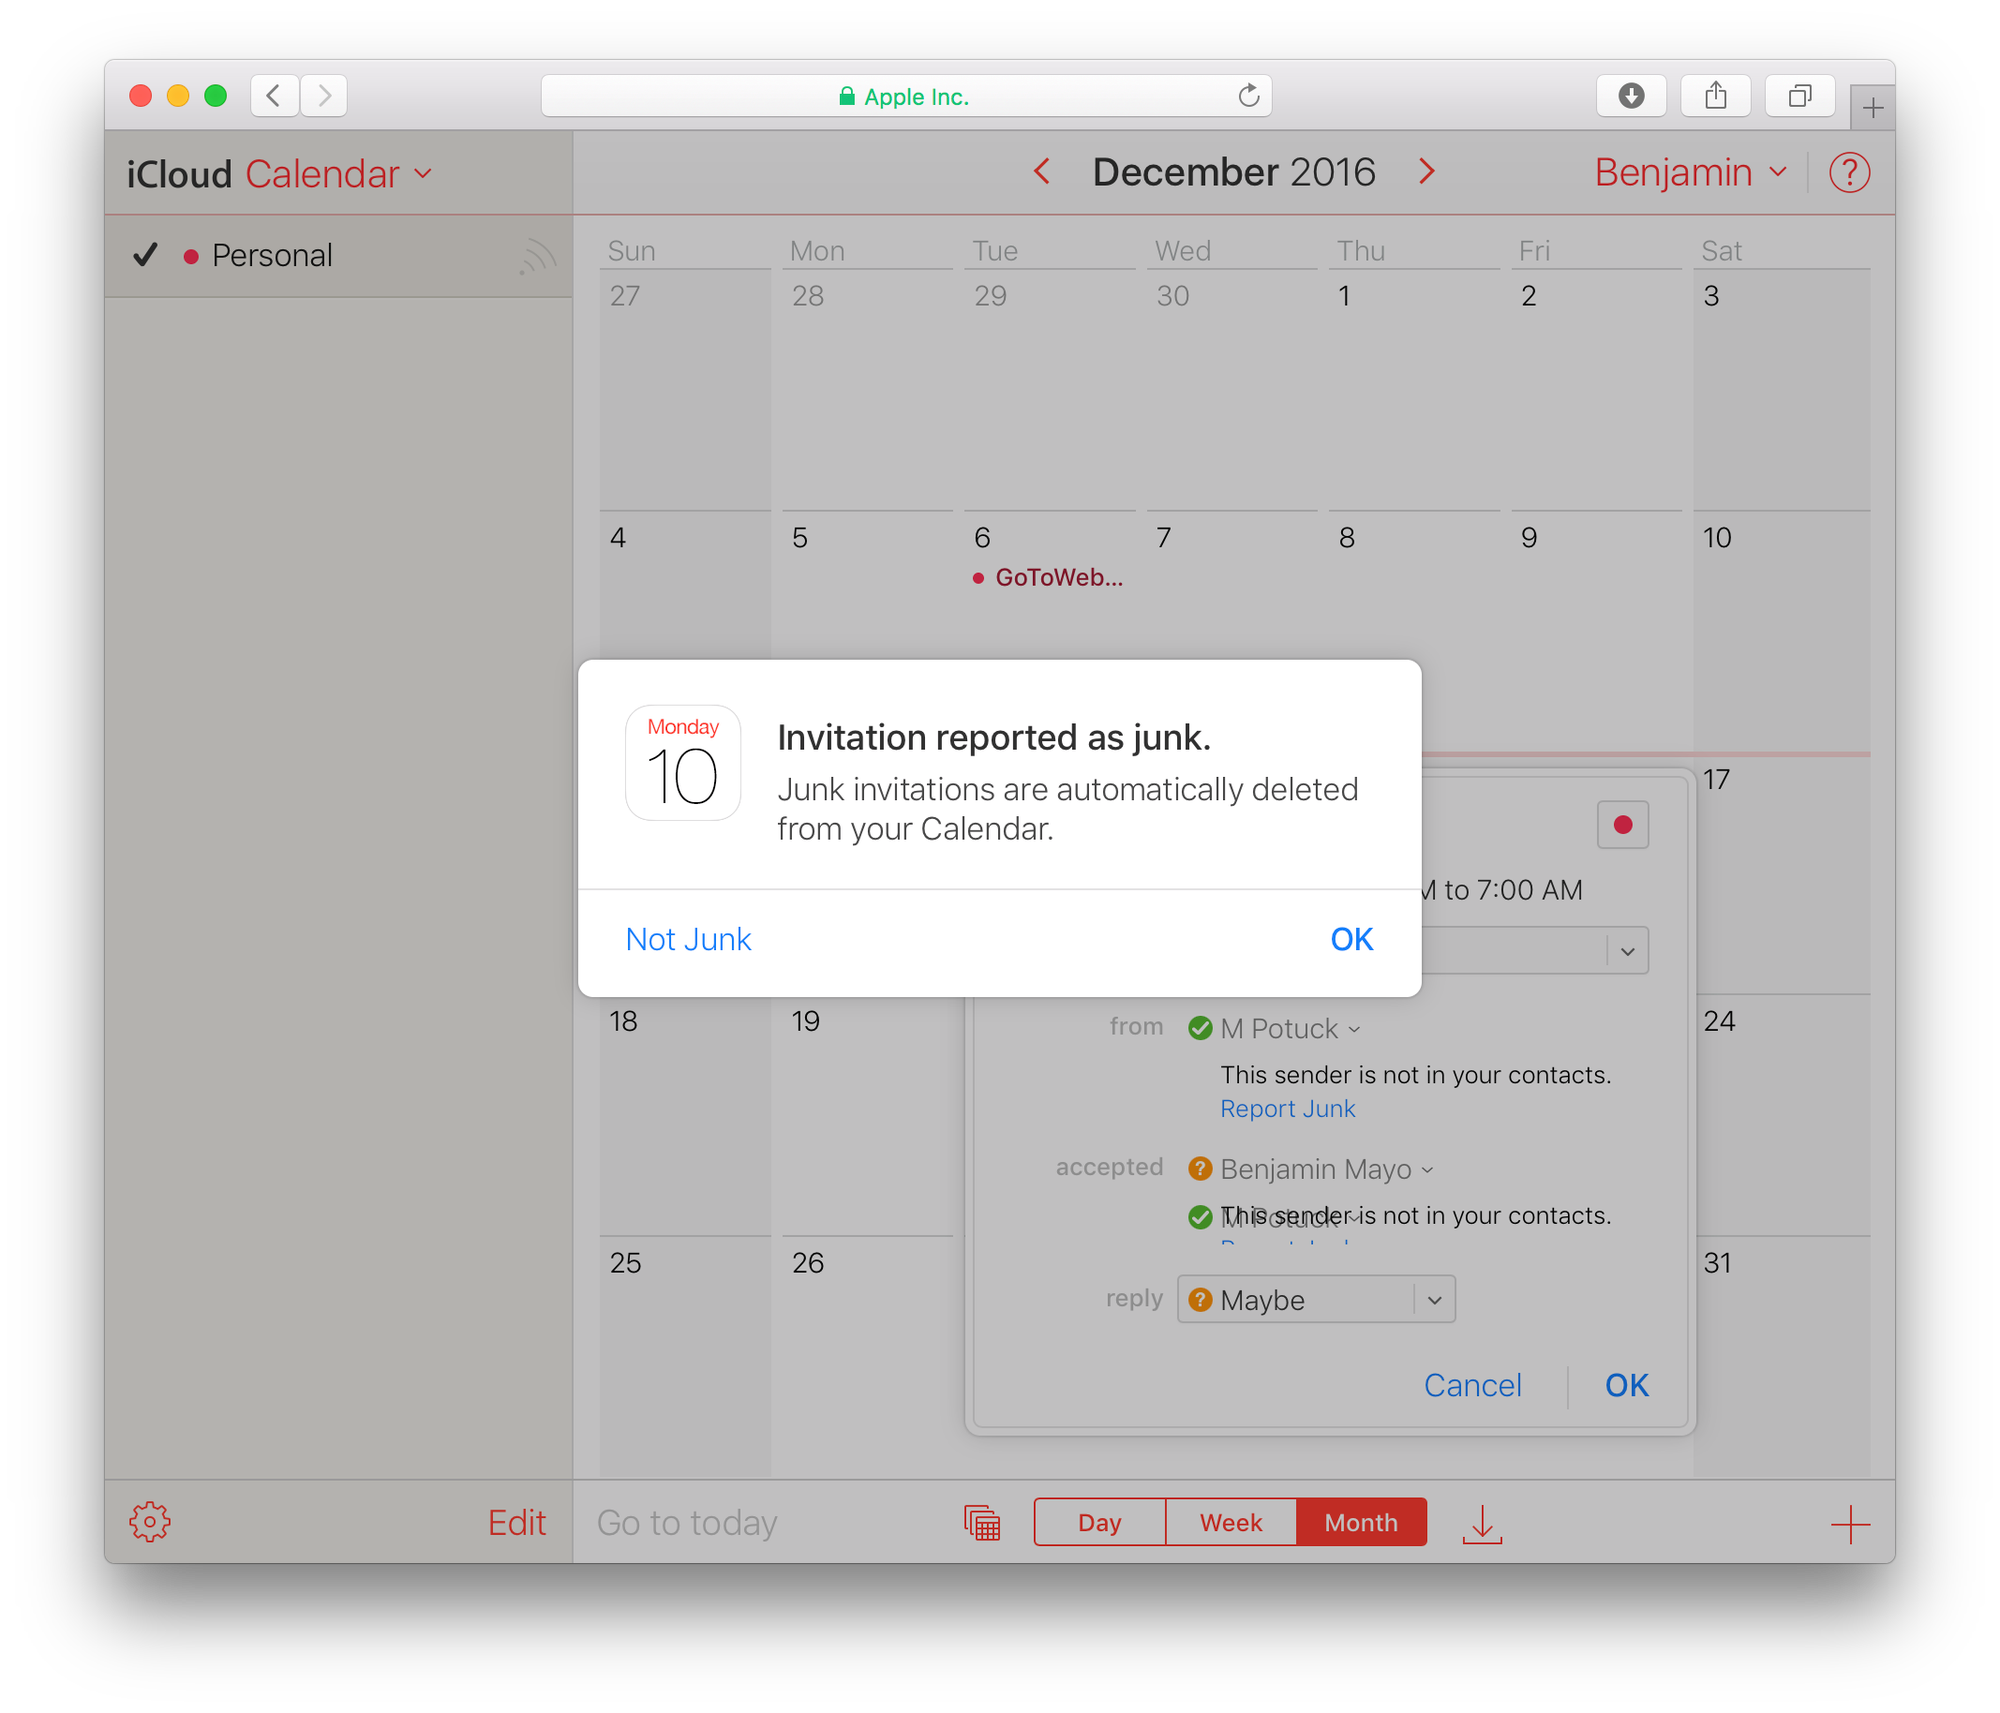 apple add report junk button to icloud calendar invitation 02